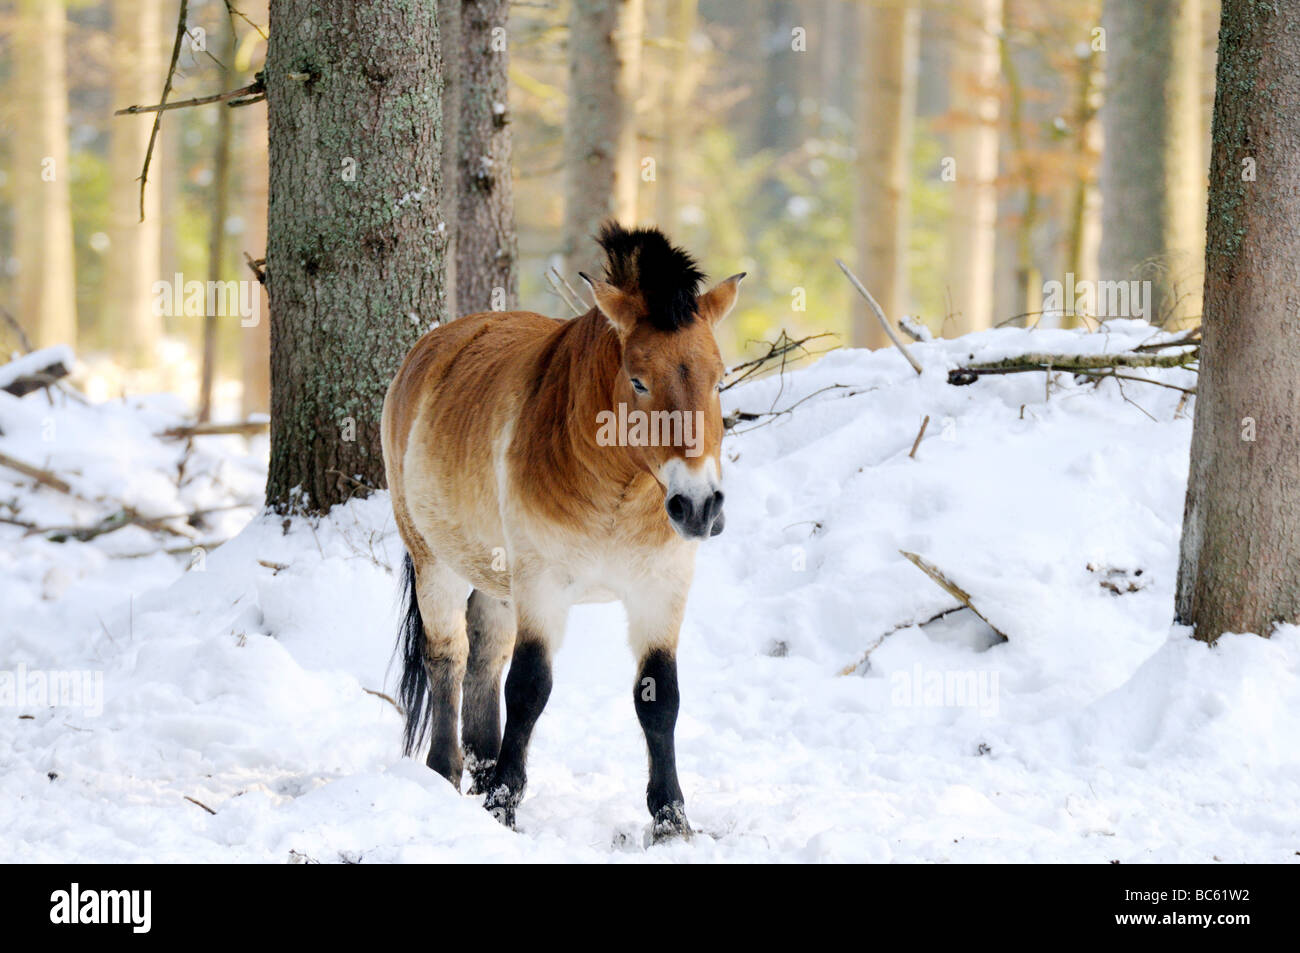 Przewalski's horse (Equus caballus przewalskii) walking in forest, Bavarian Forest National Park, Bavaria, Germany Stock Photo